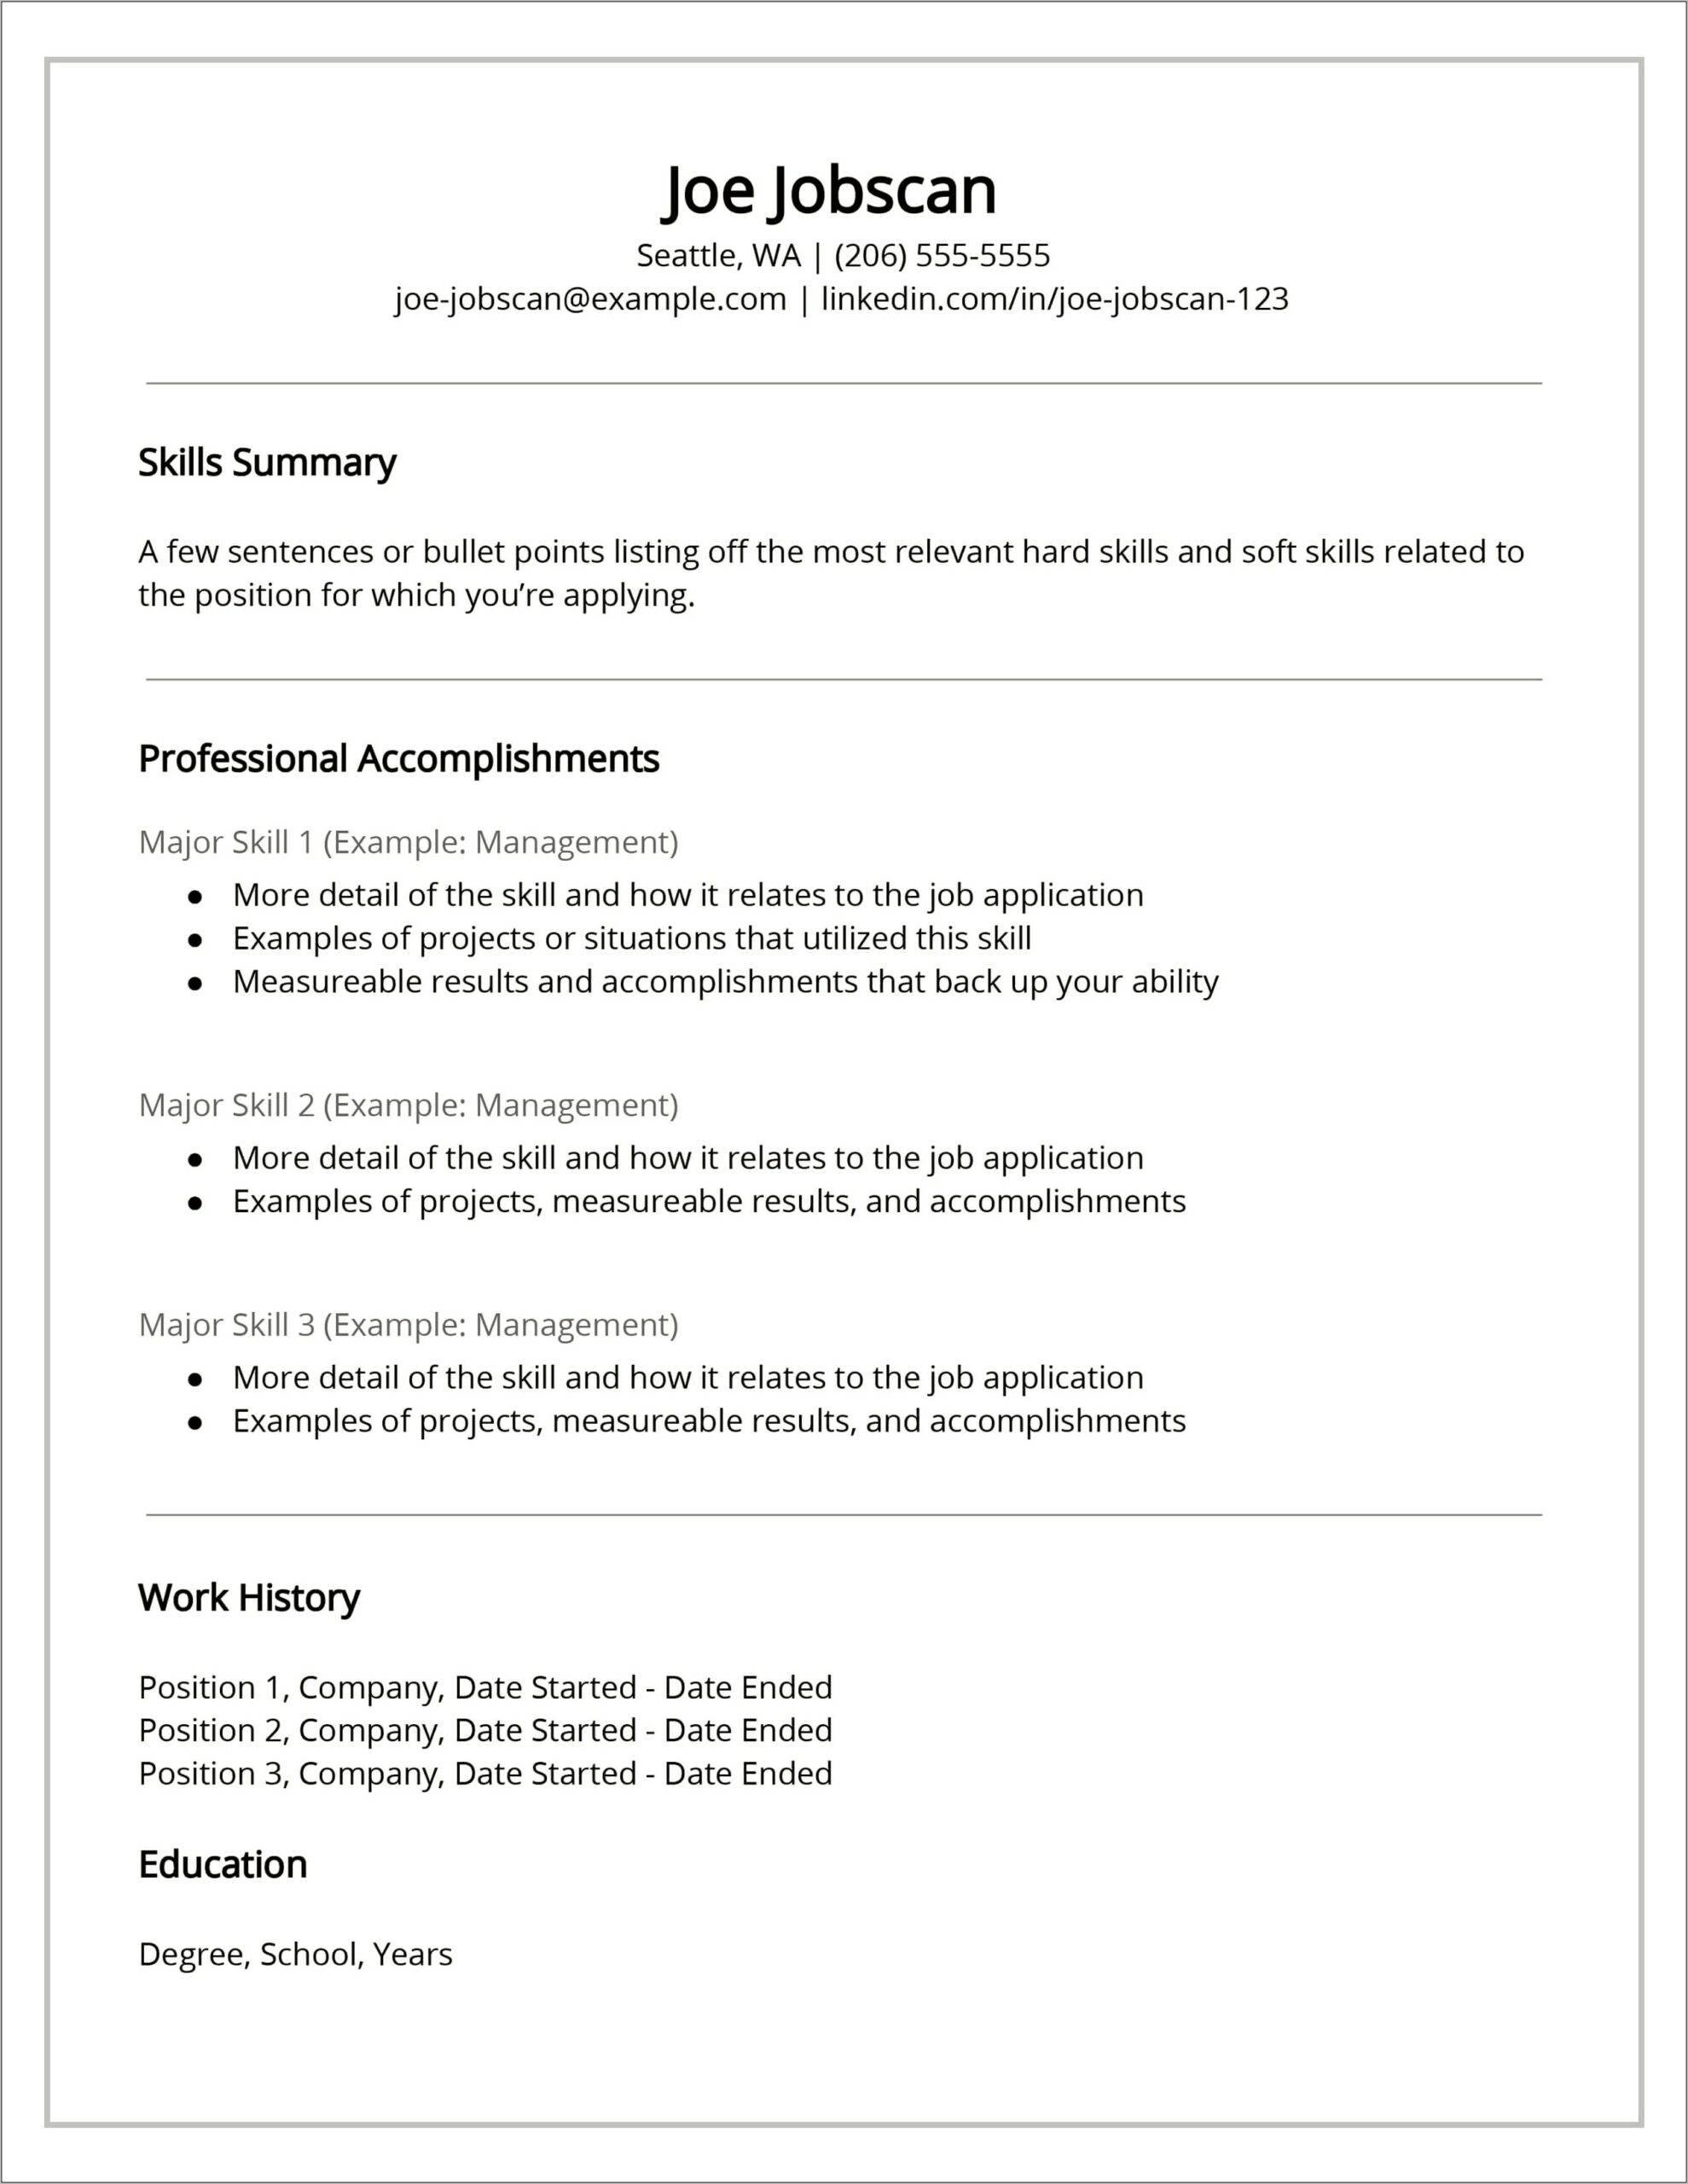 Best Resume Format For Many Jobs